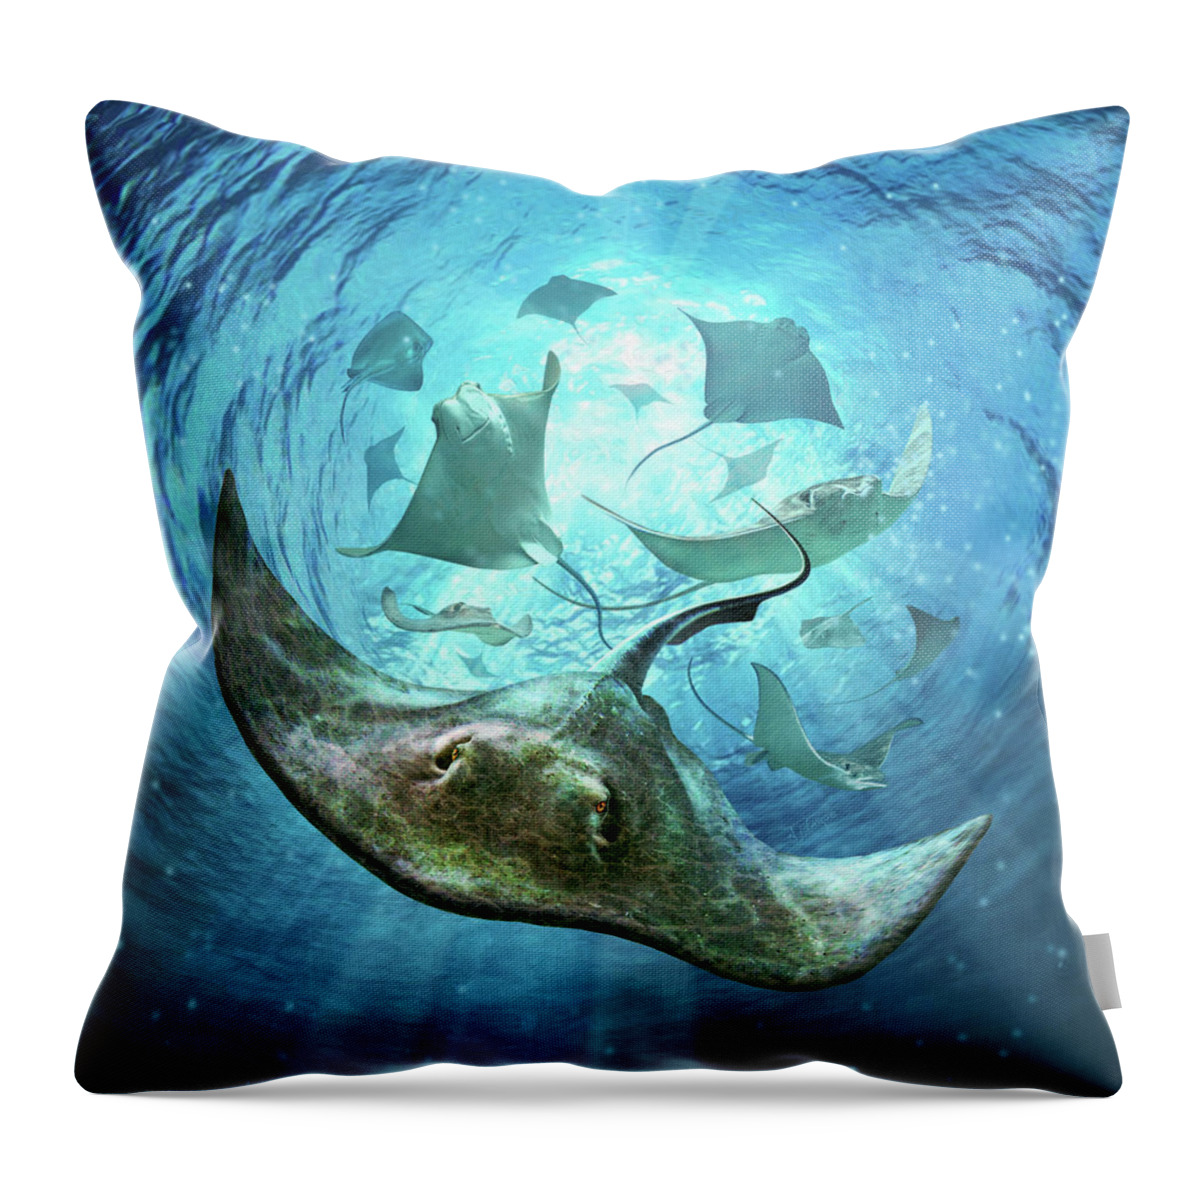 Stingrays Throw Pillow featuring the digital art Sting Rays by Jerry LoFaro